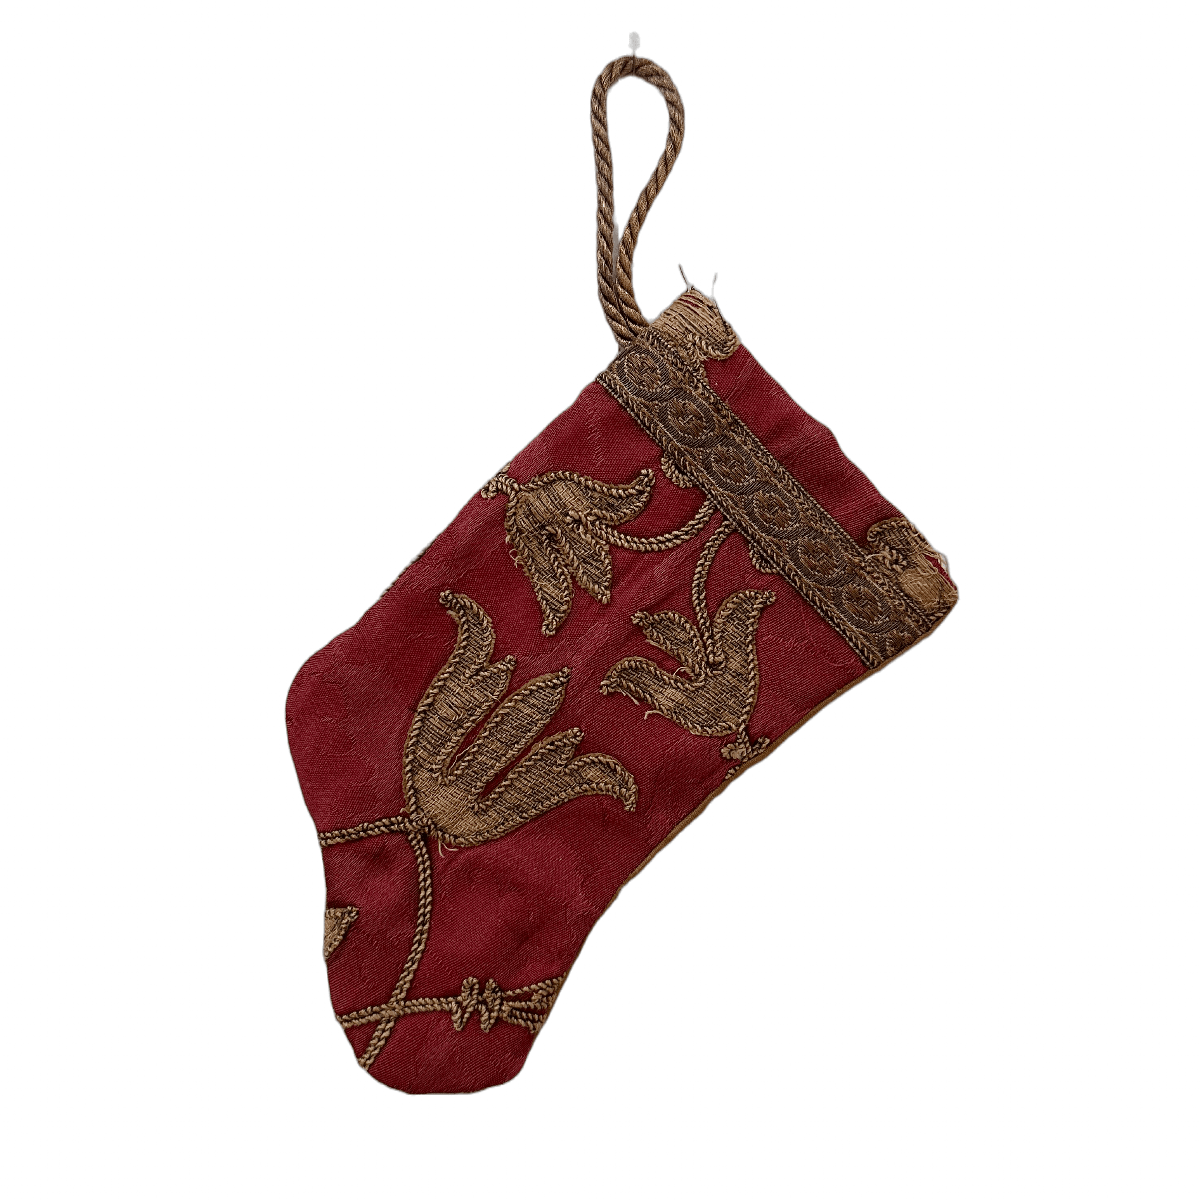 Handmade Mini Stocking Ornament from Antique & Vintage Textiles, Trims Ornament B. Viz Design C 